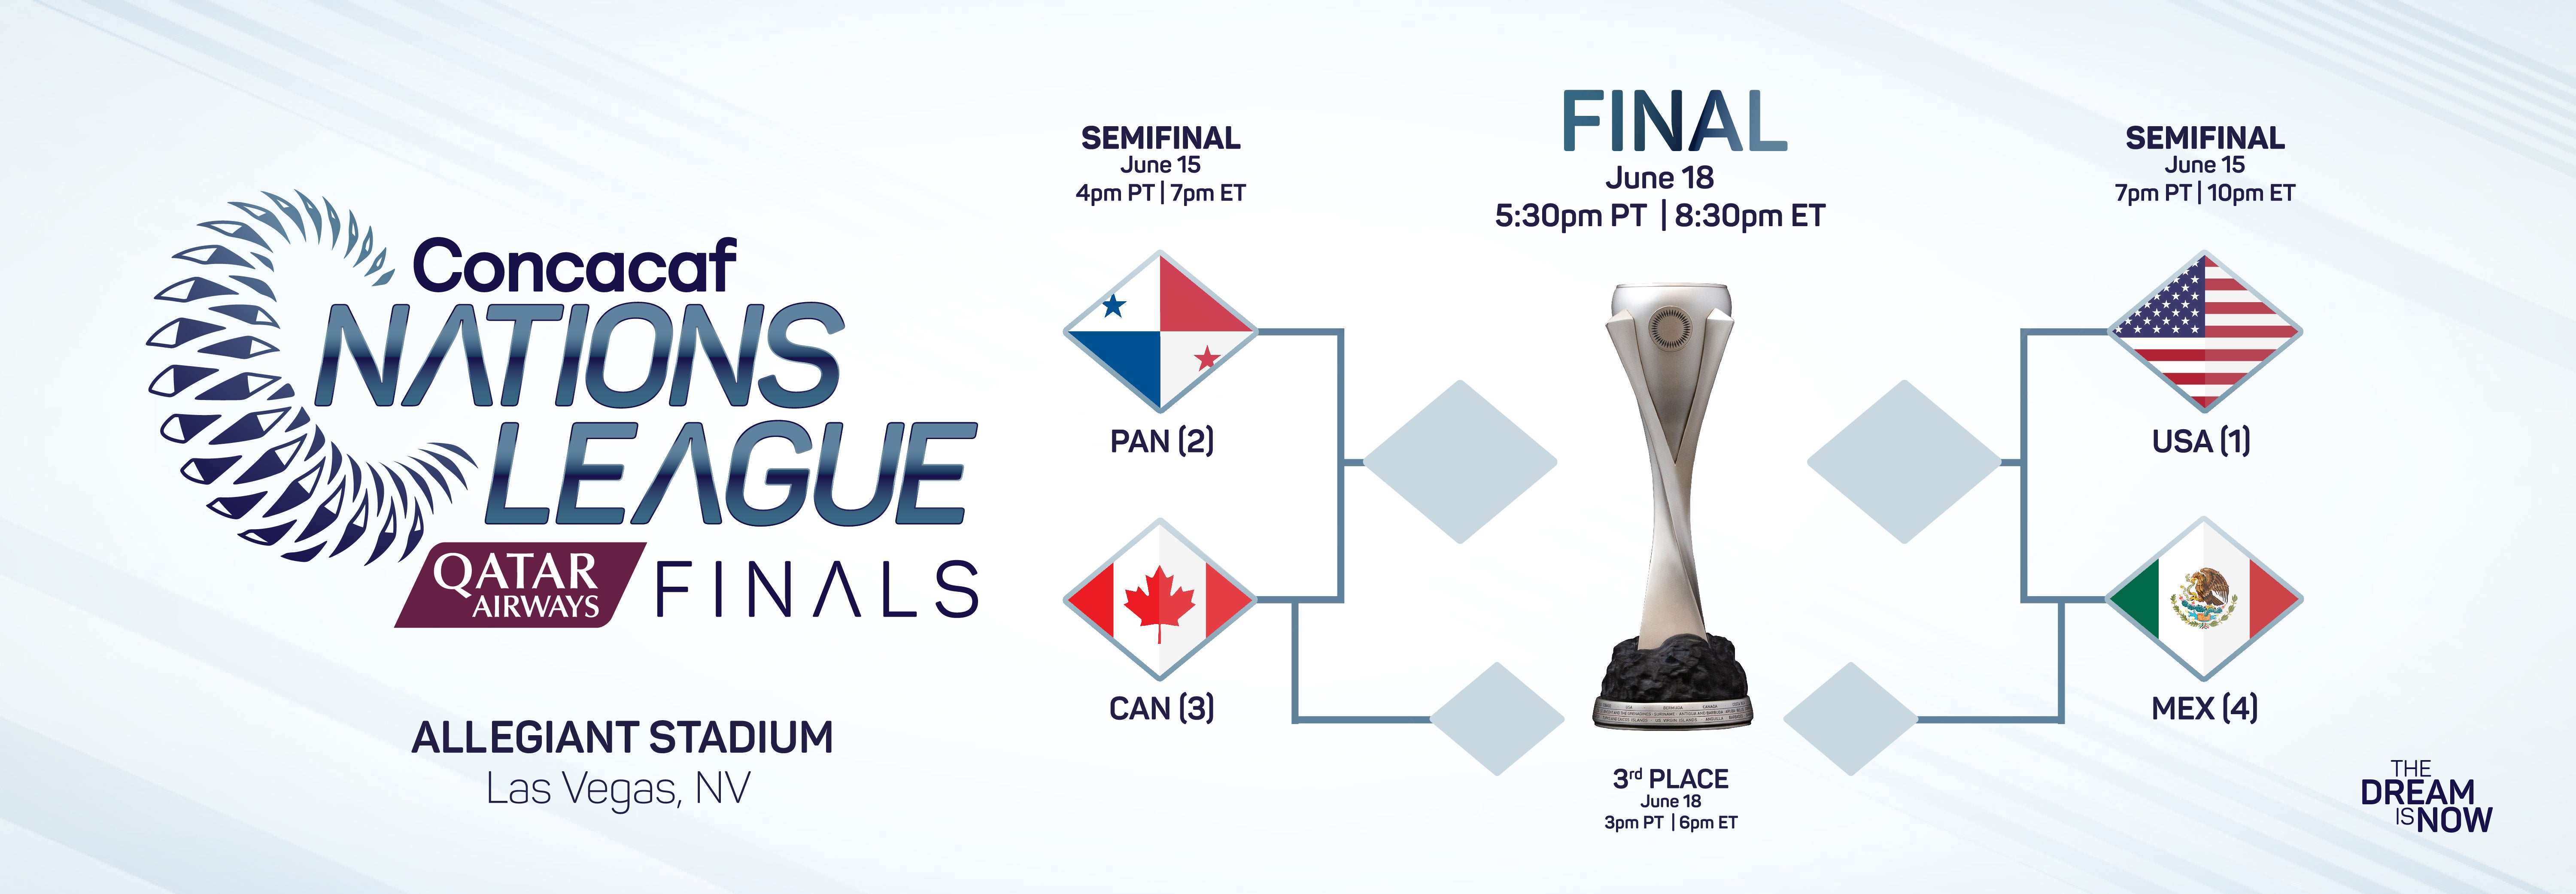 Concacaf Nations League Finals